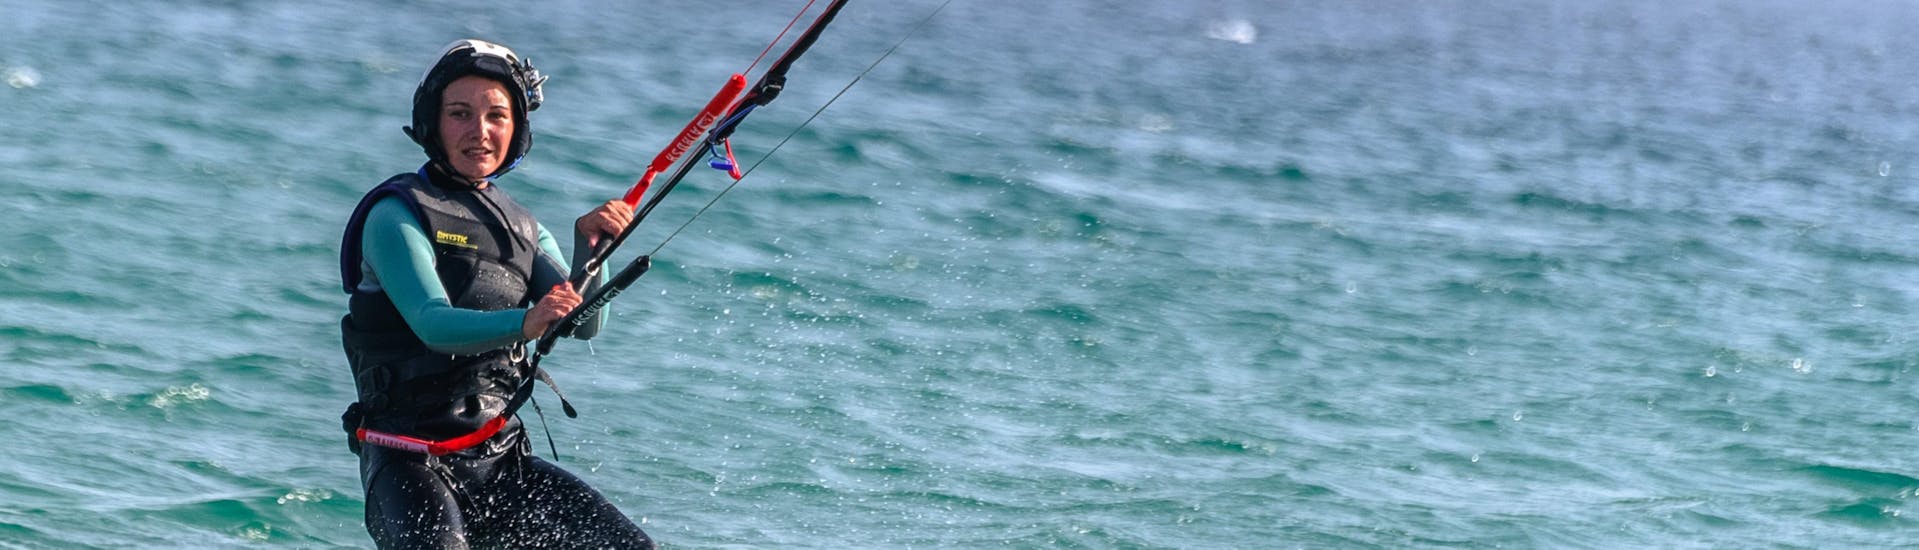 Lezioni di kitesurf a Tarifa da 8 anni.